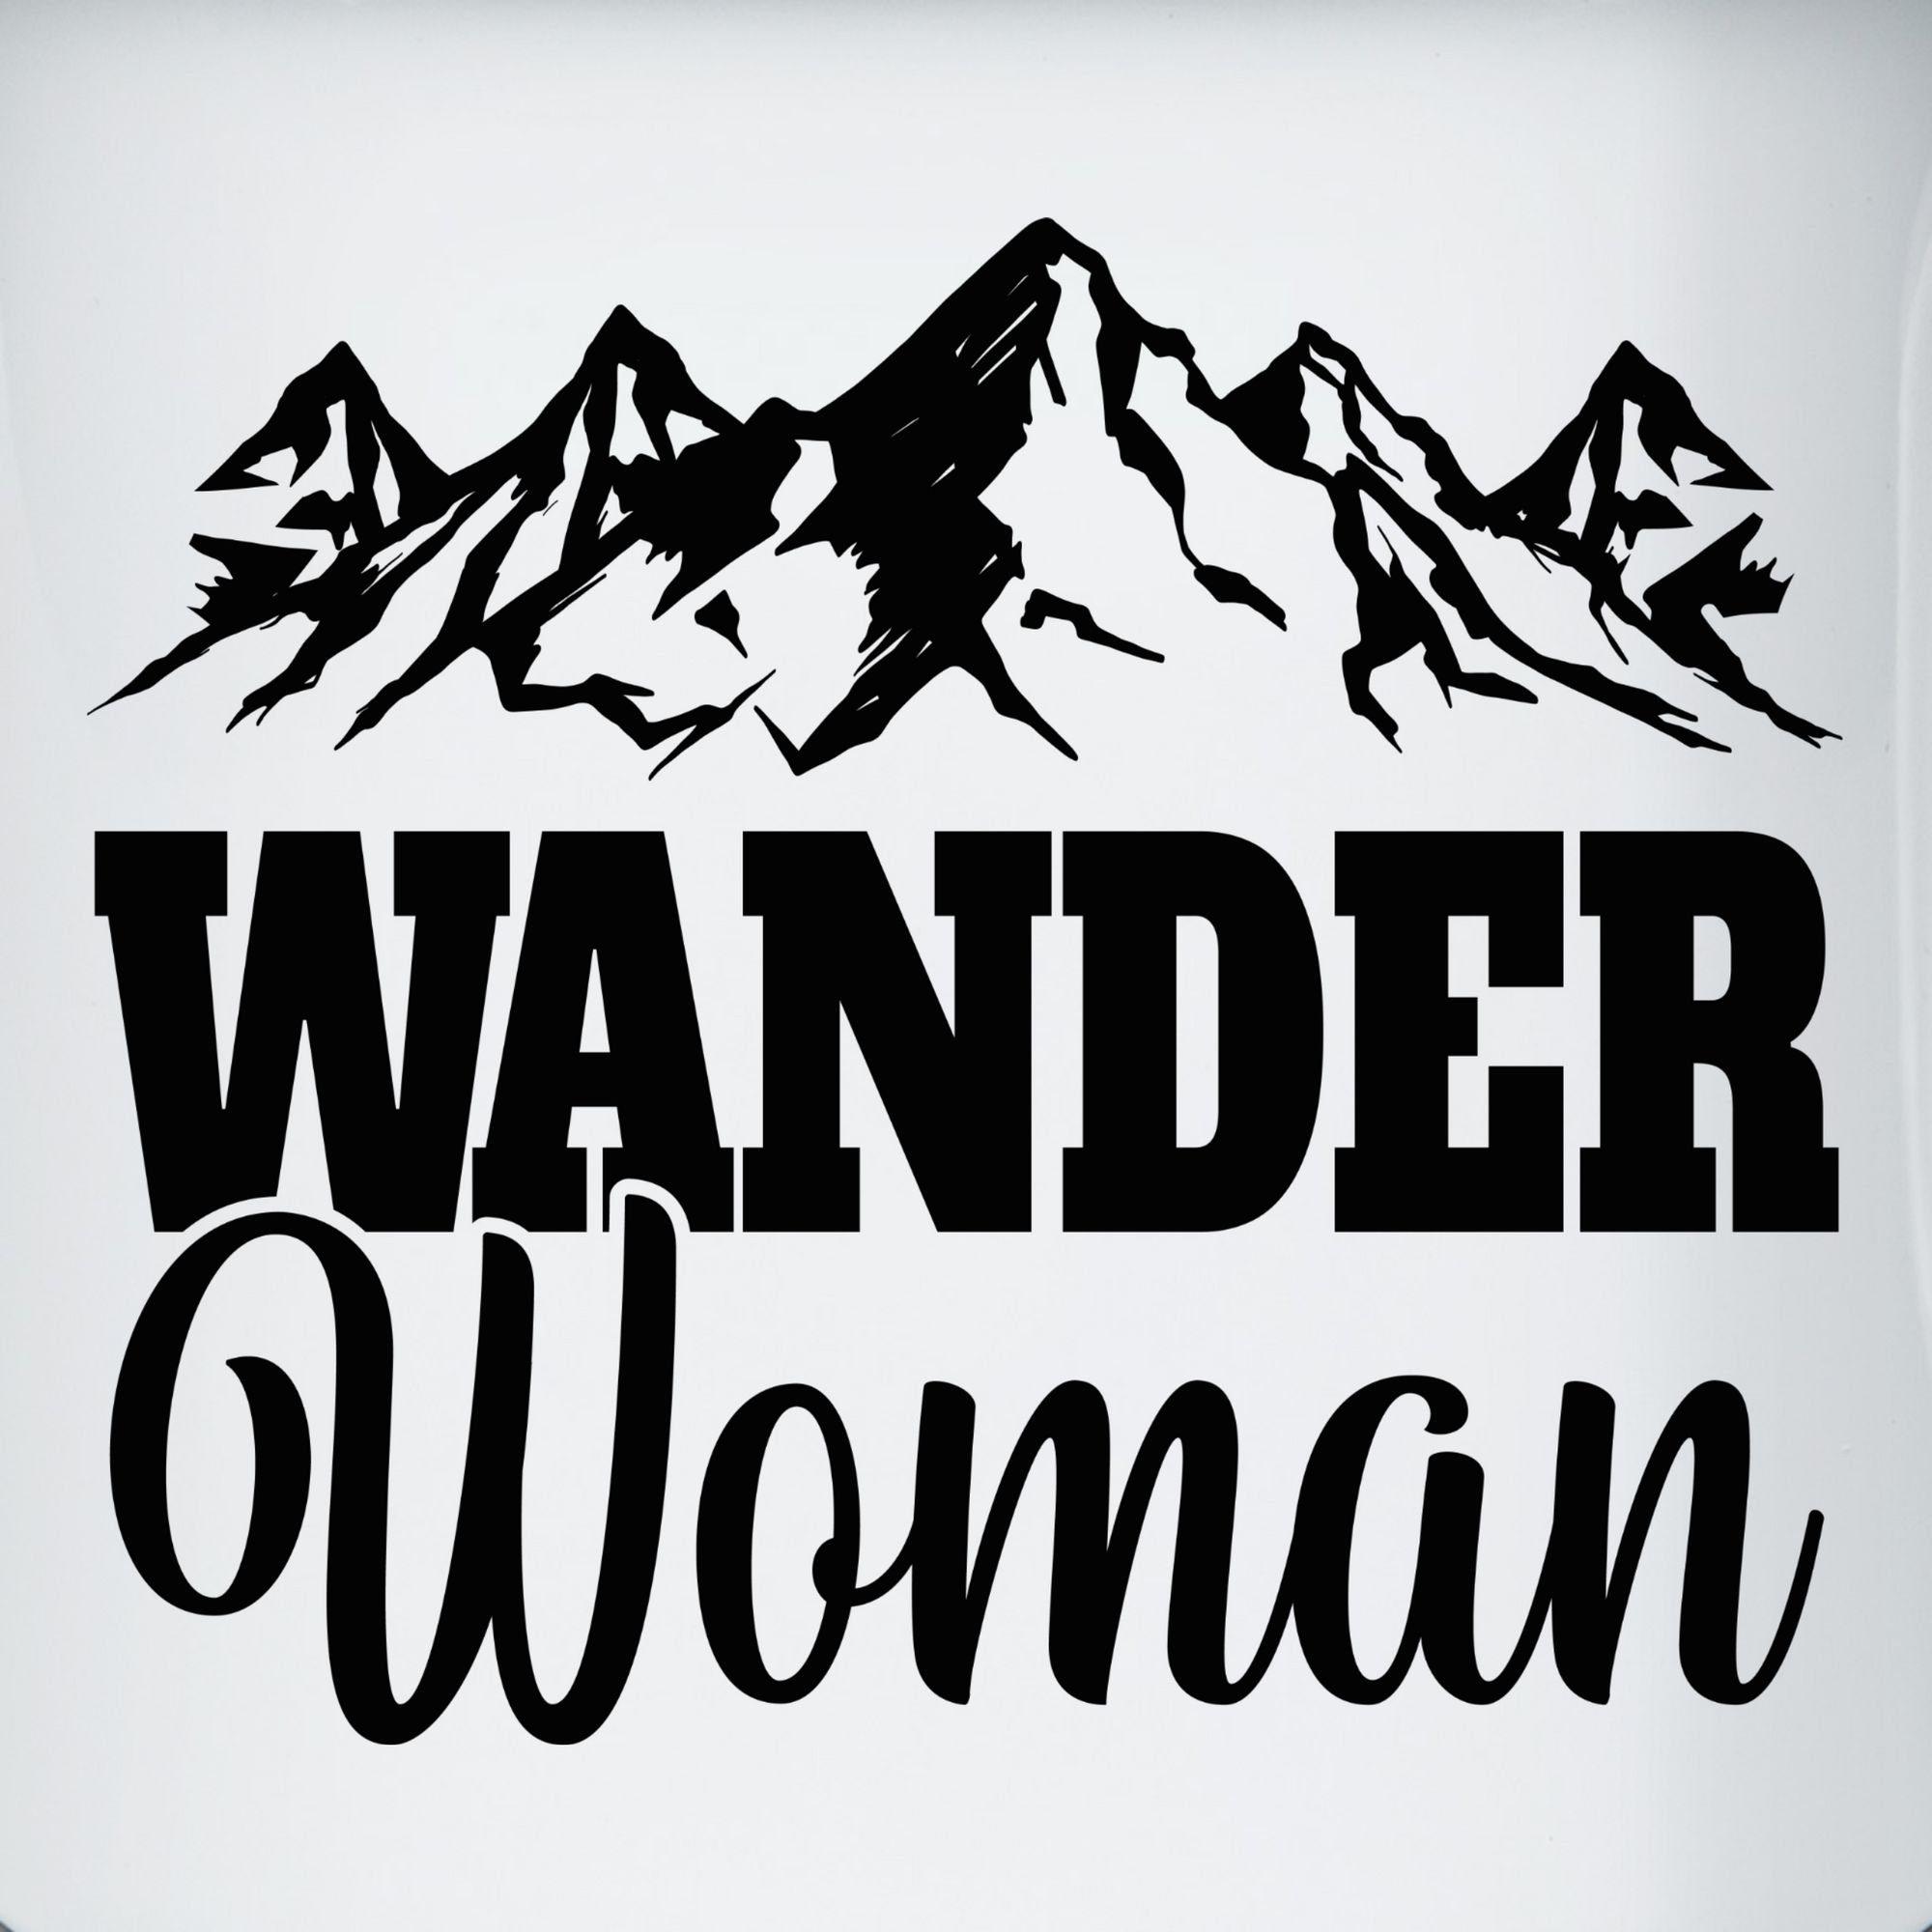 - Geschenk Hobby Geschenk 1 Kaffeetasse Shirtracer Tasse Weiß Wander Woman Wanderin, Stahlblech, Schwarz für